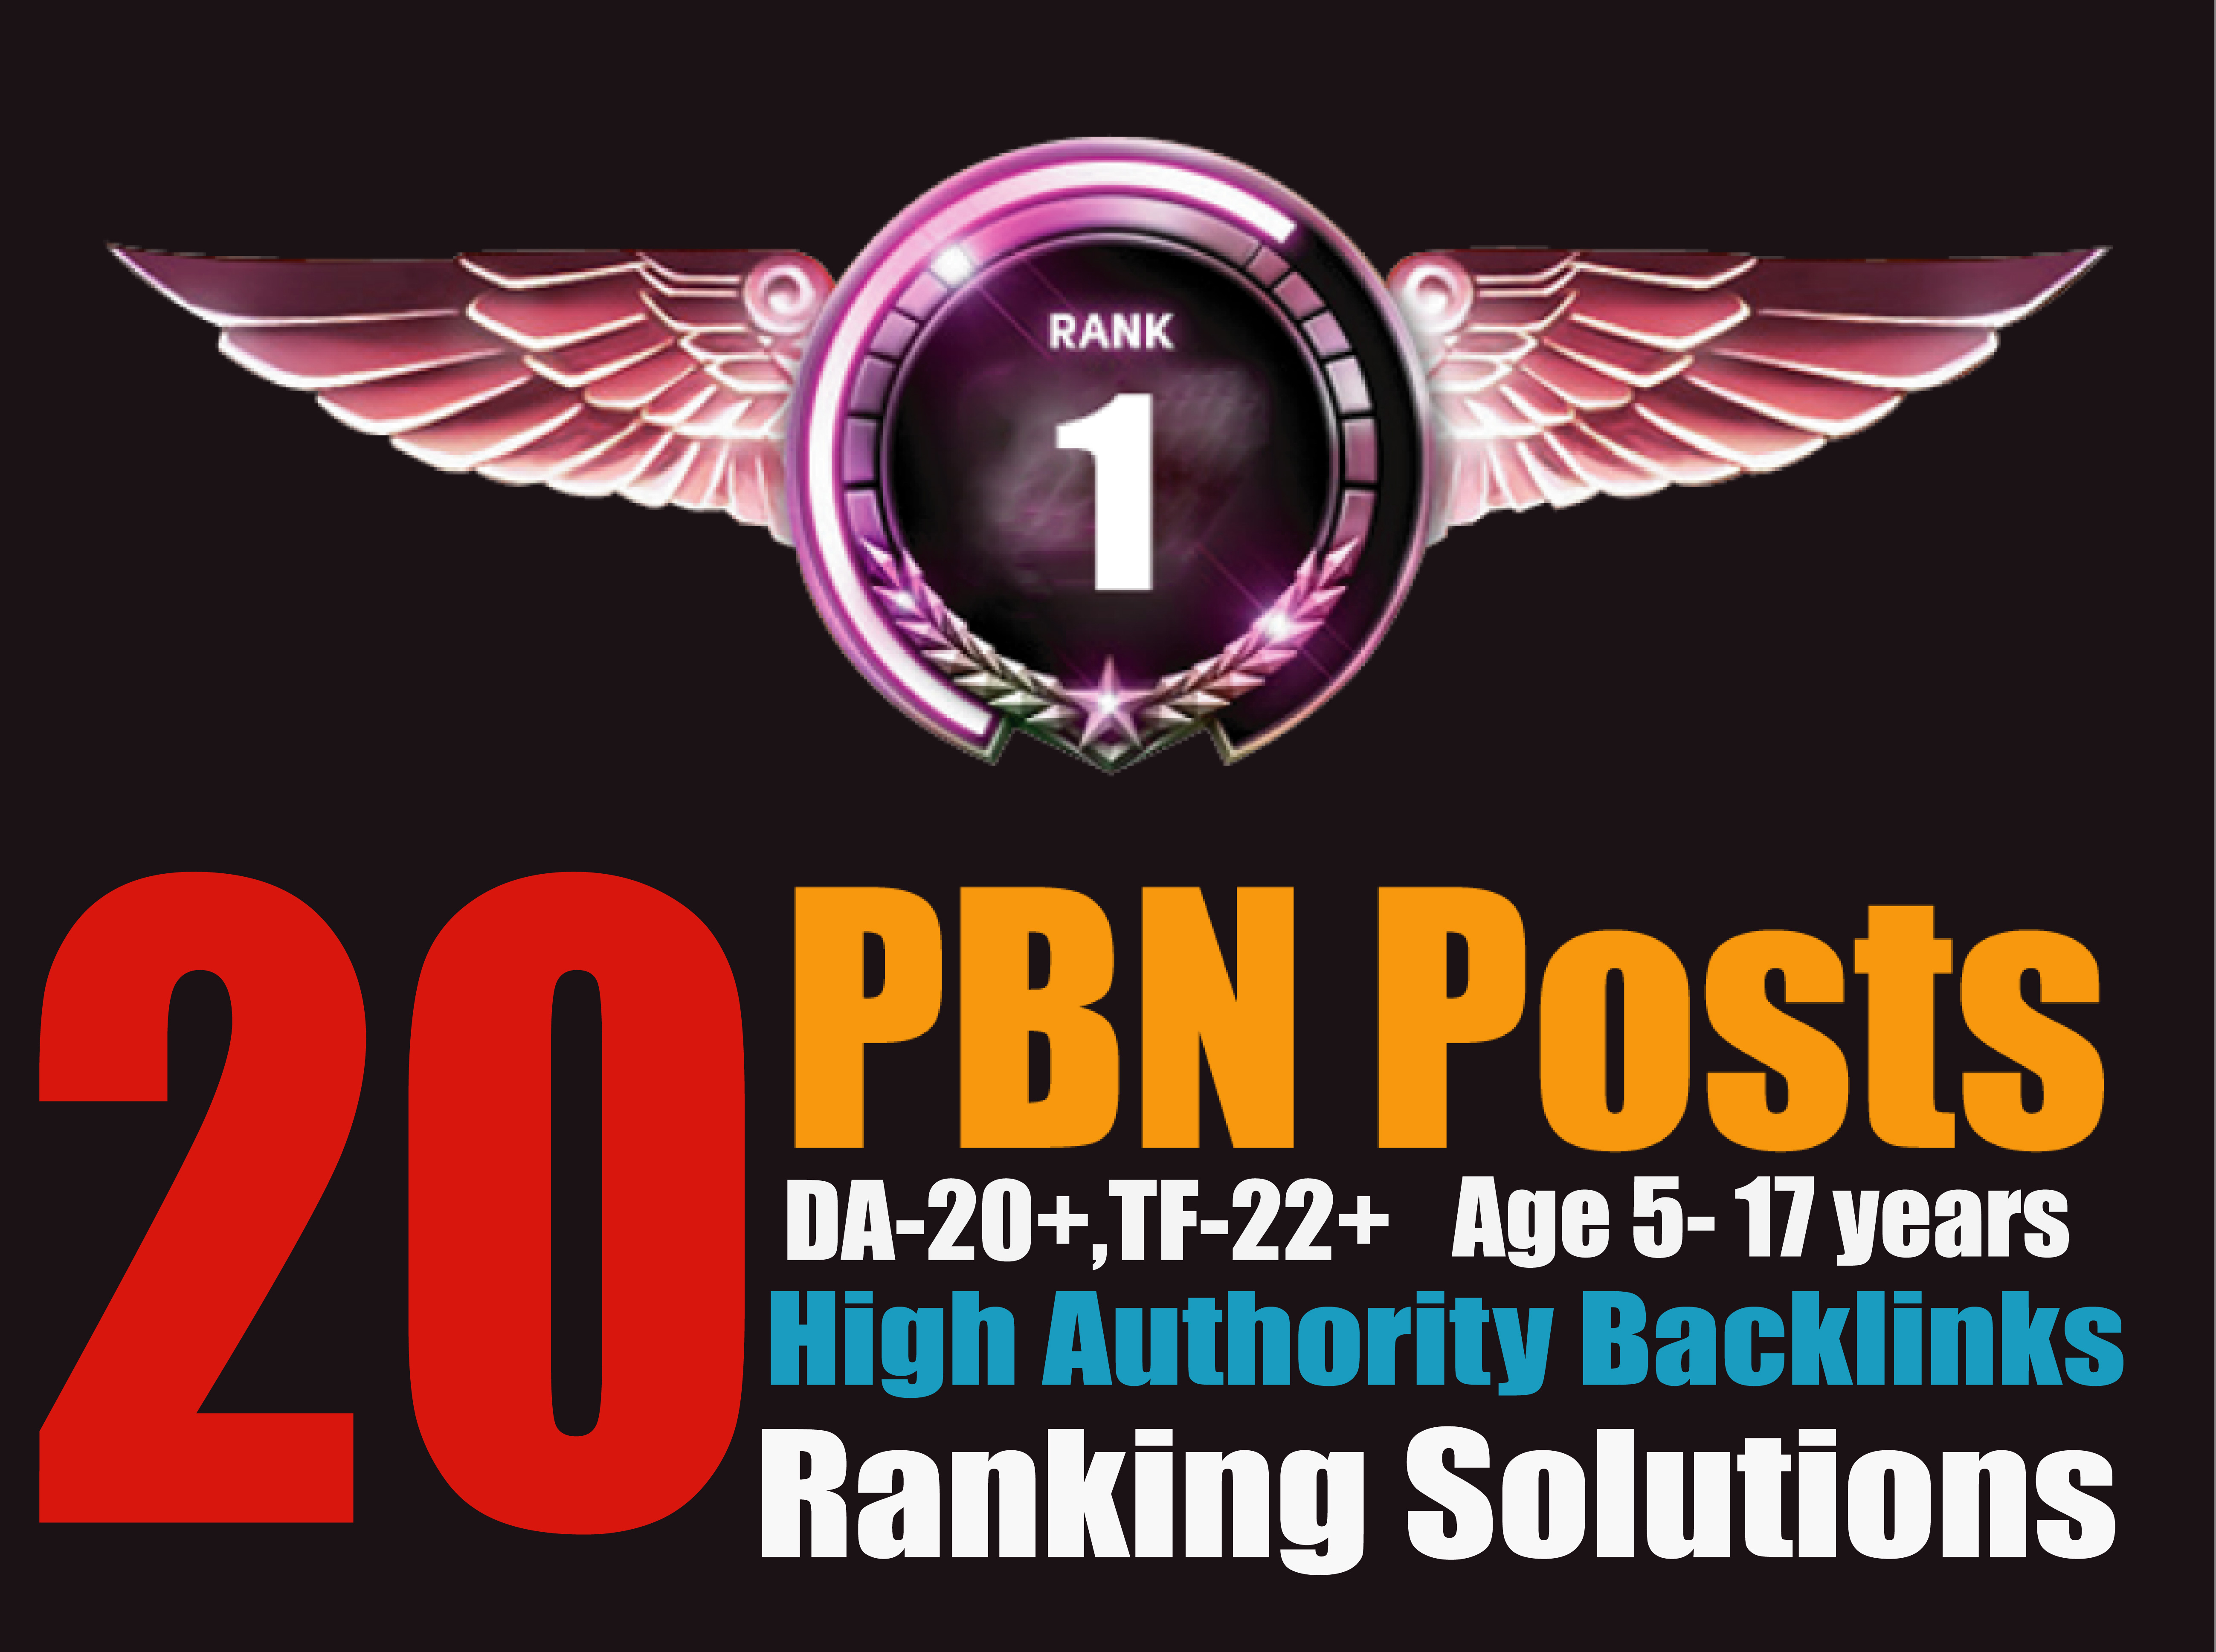 Ranking Solutions - 20 PBN Posts [DA26+TF26+]